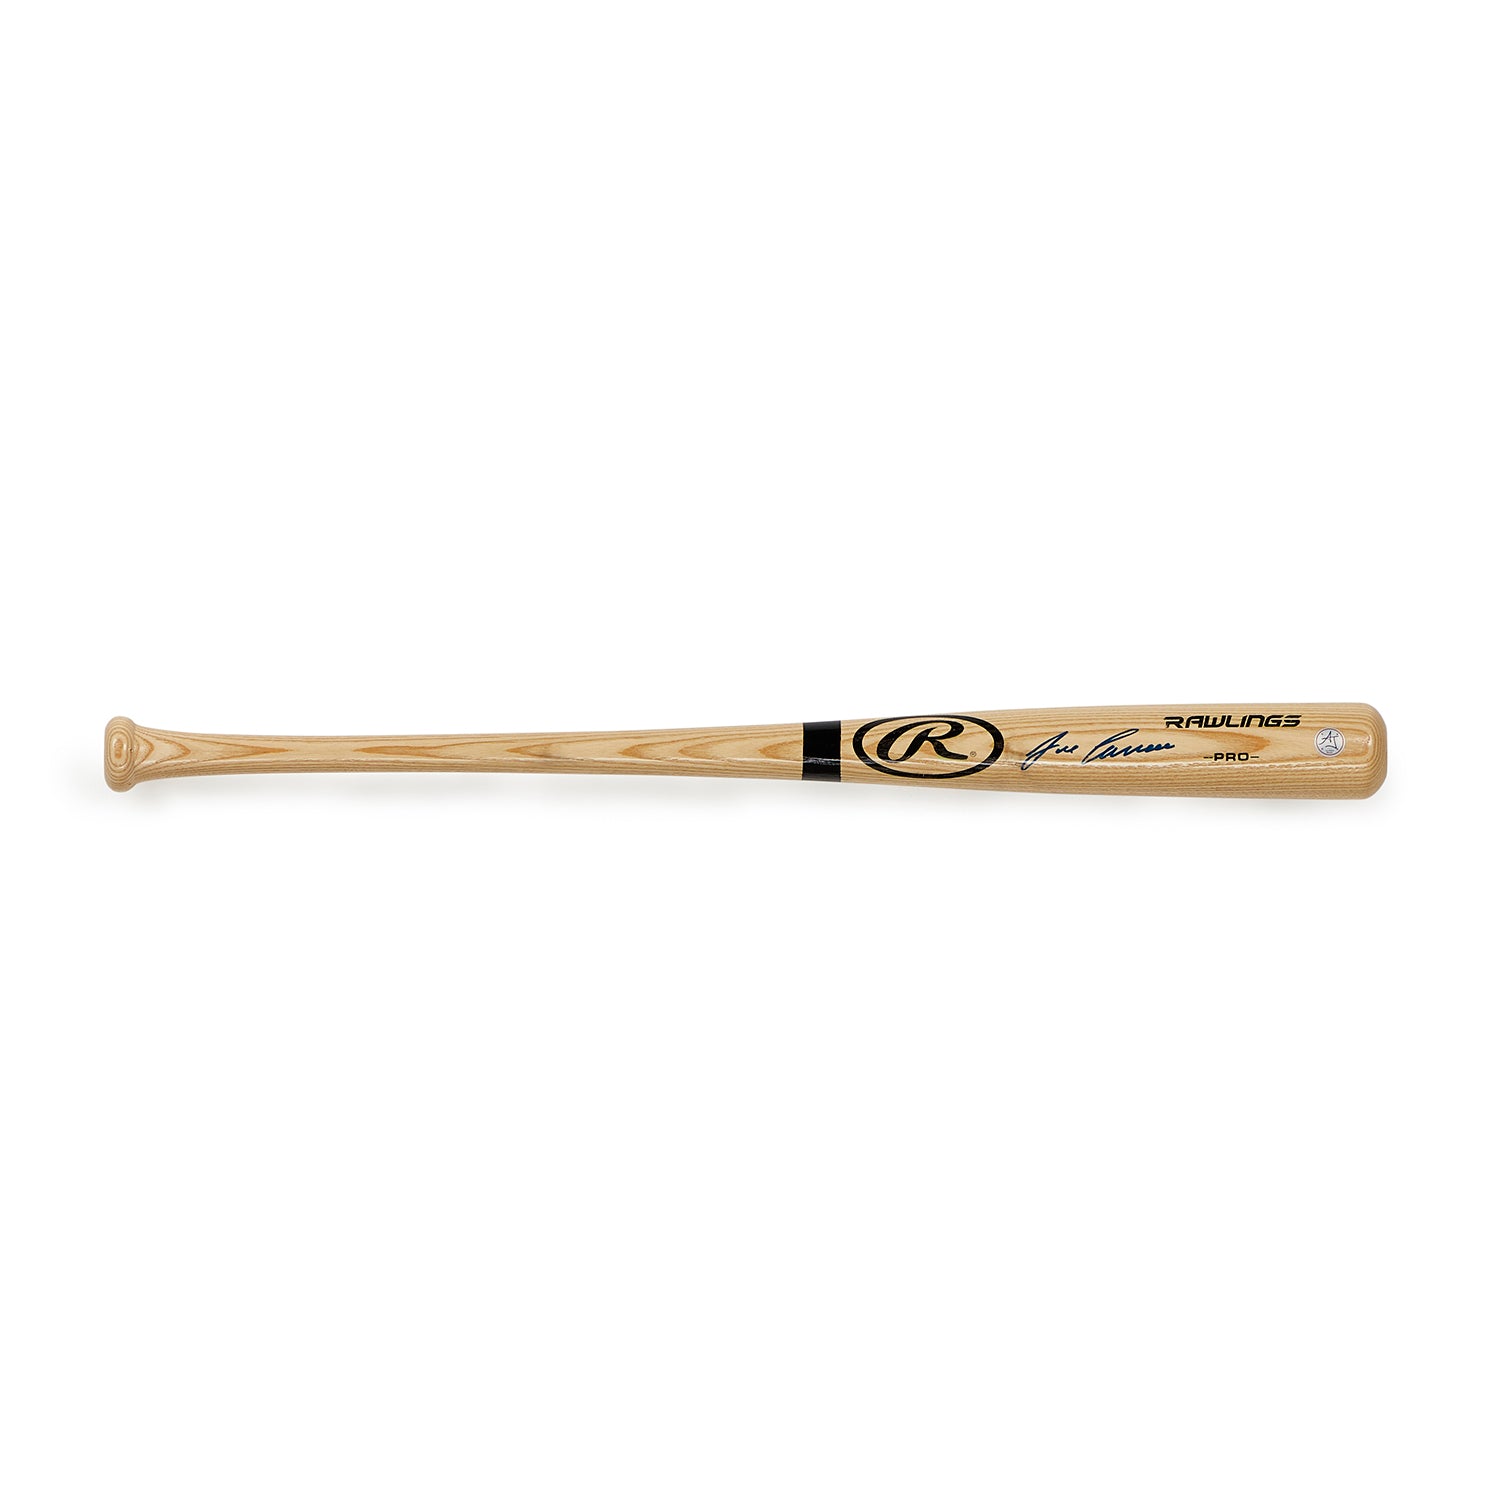 Jose Canseco Autographed Pro Blonde Rawlings Baseball Bat